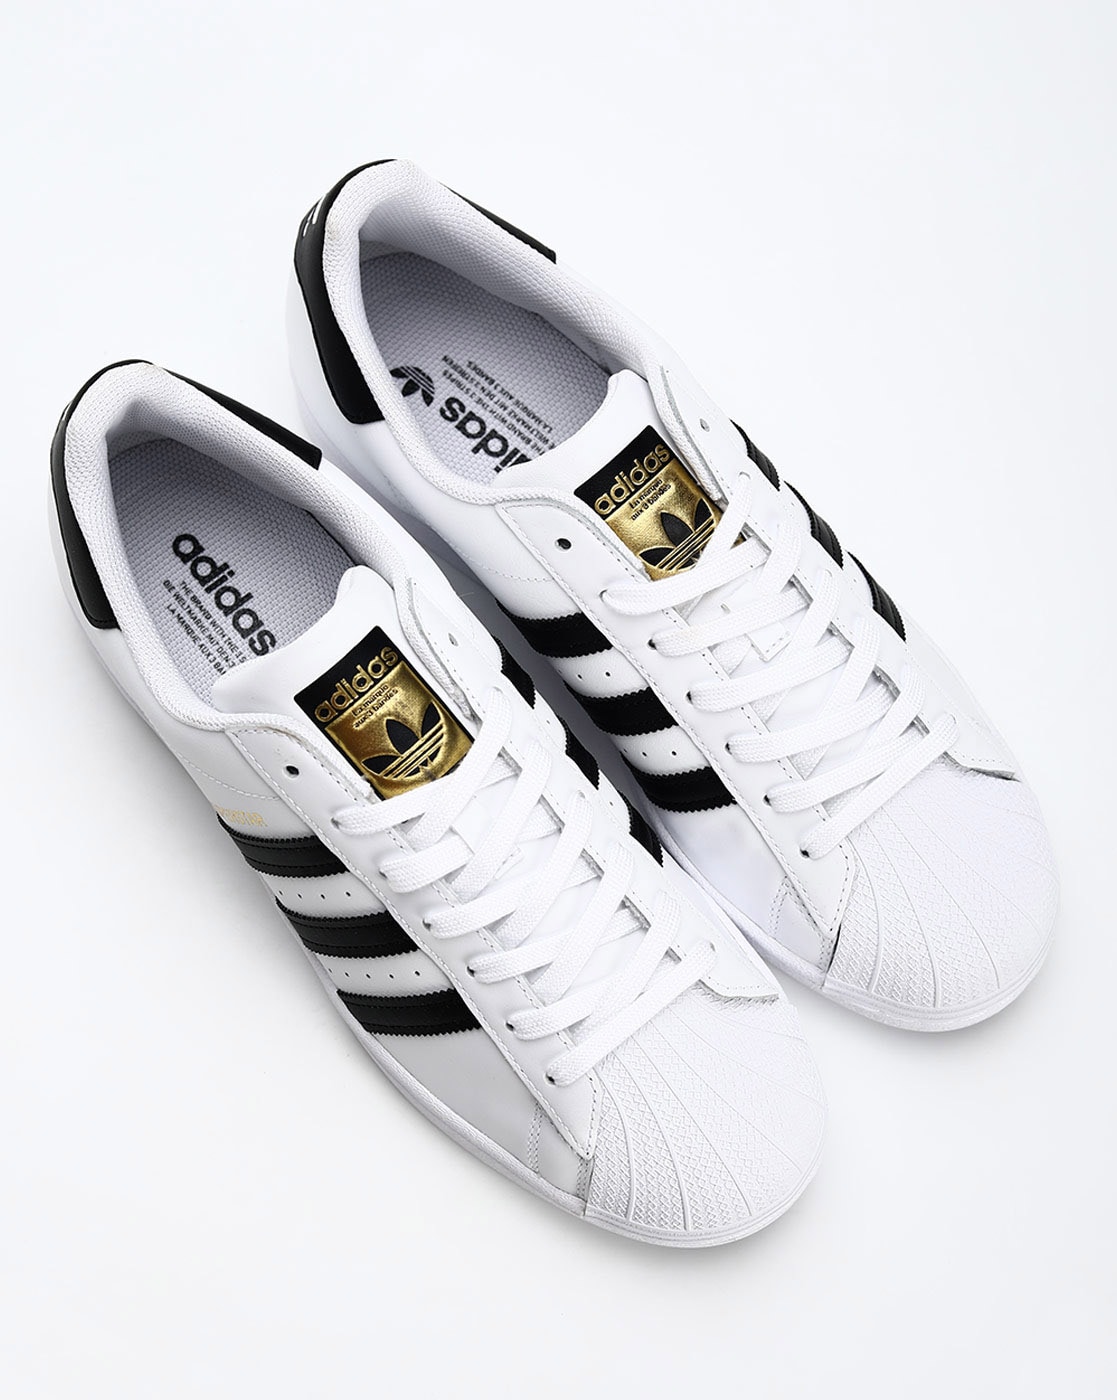 Adidas La Marque aux 3 Bandes White Shell Toe Superstar Sneakers  Men6.5=women 8 | eBay